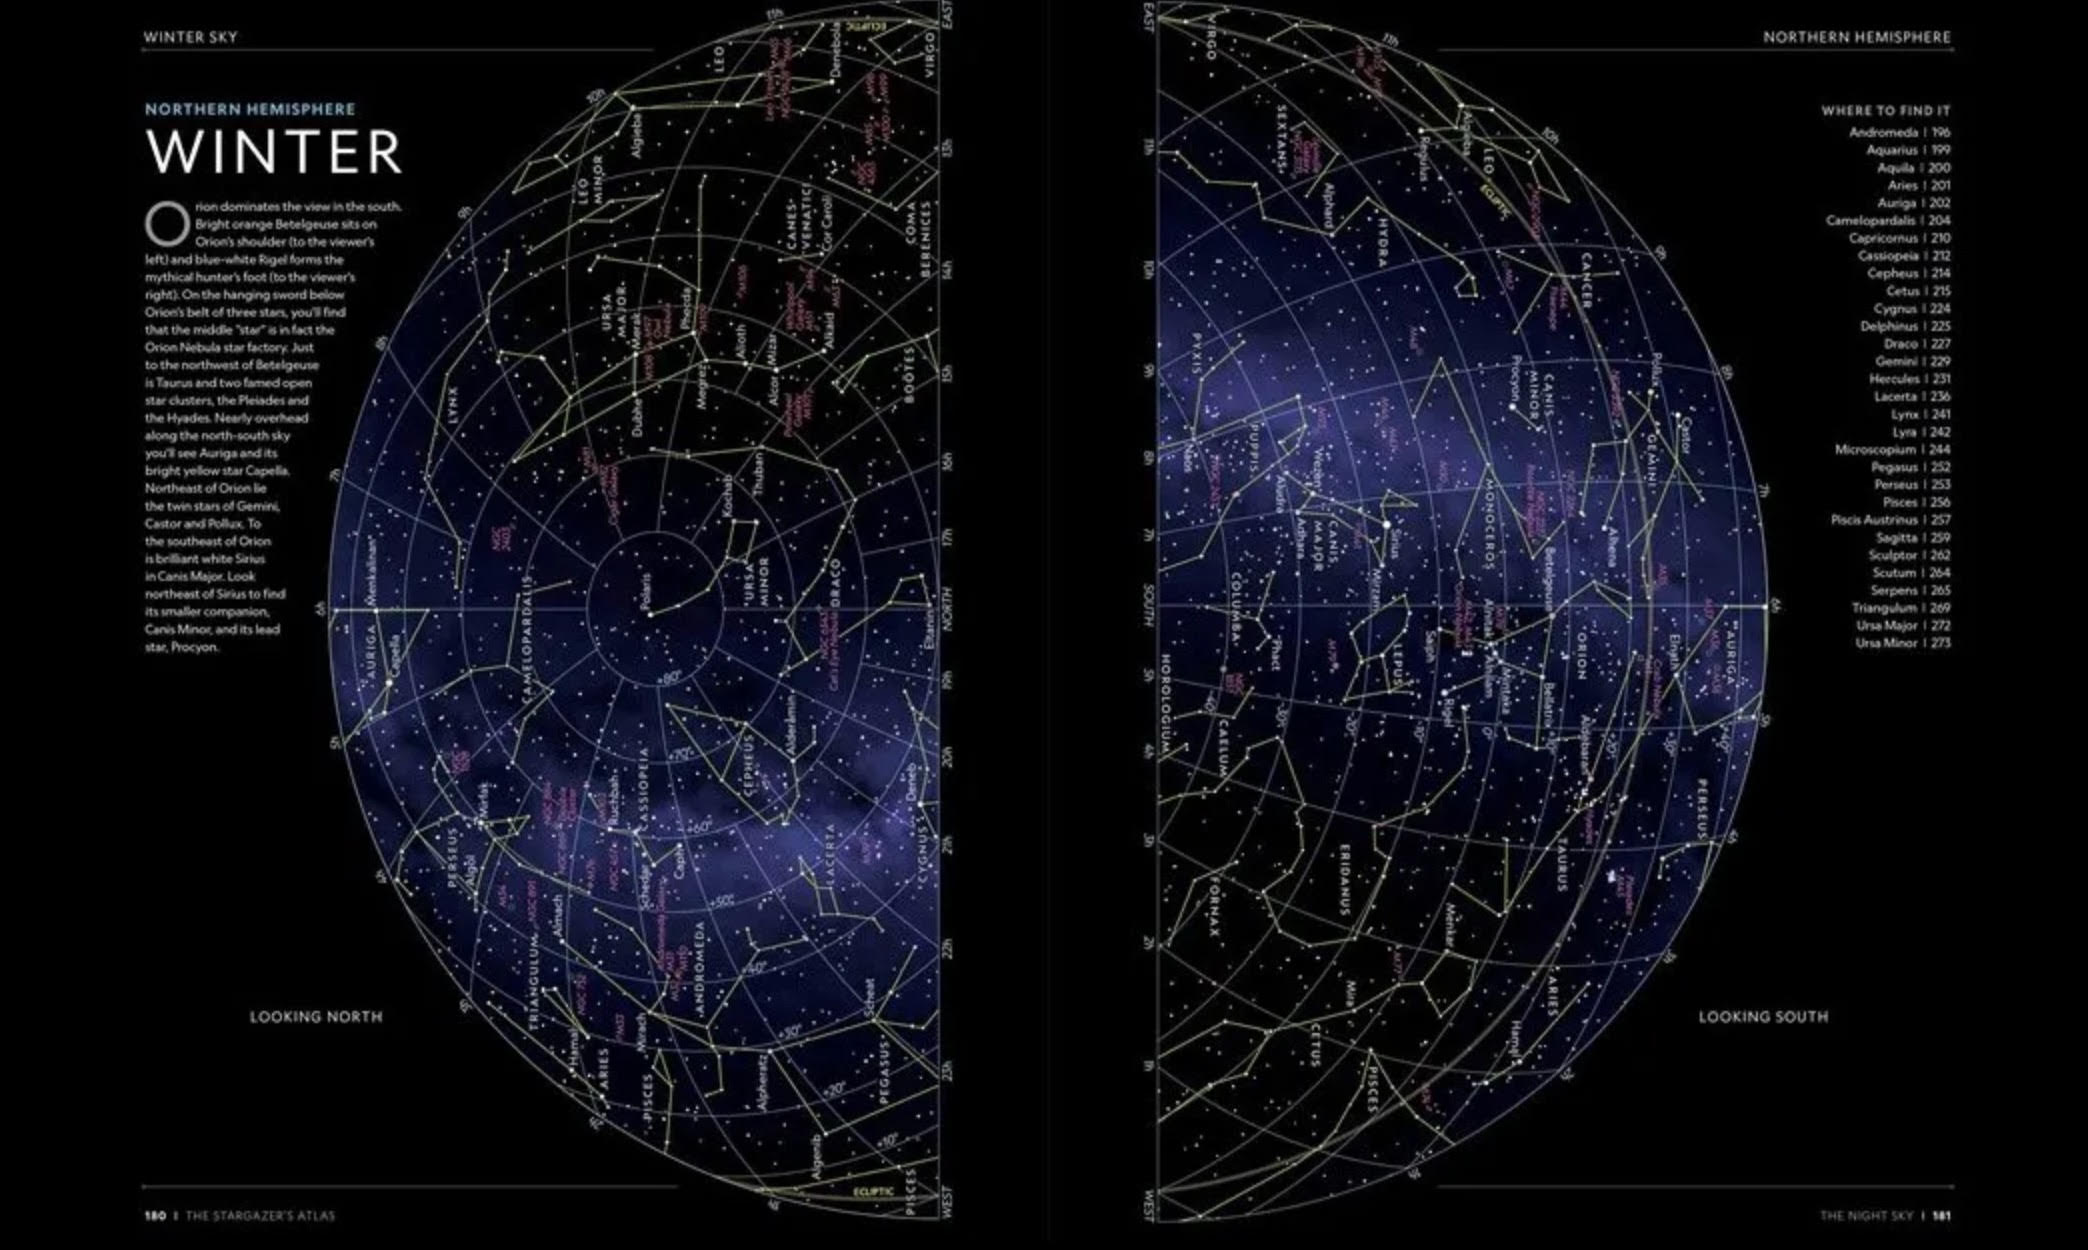 Stargazer's Atlas: The Ultimate Guide to the Night Sky